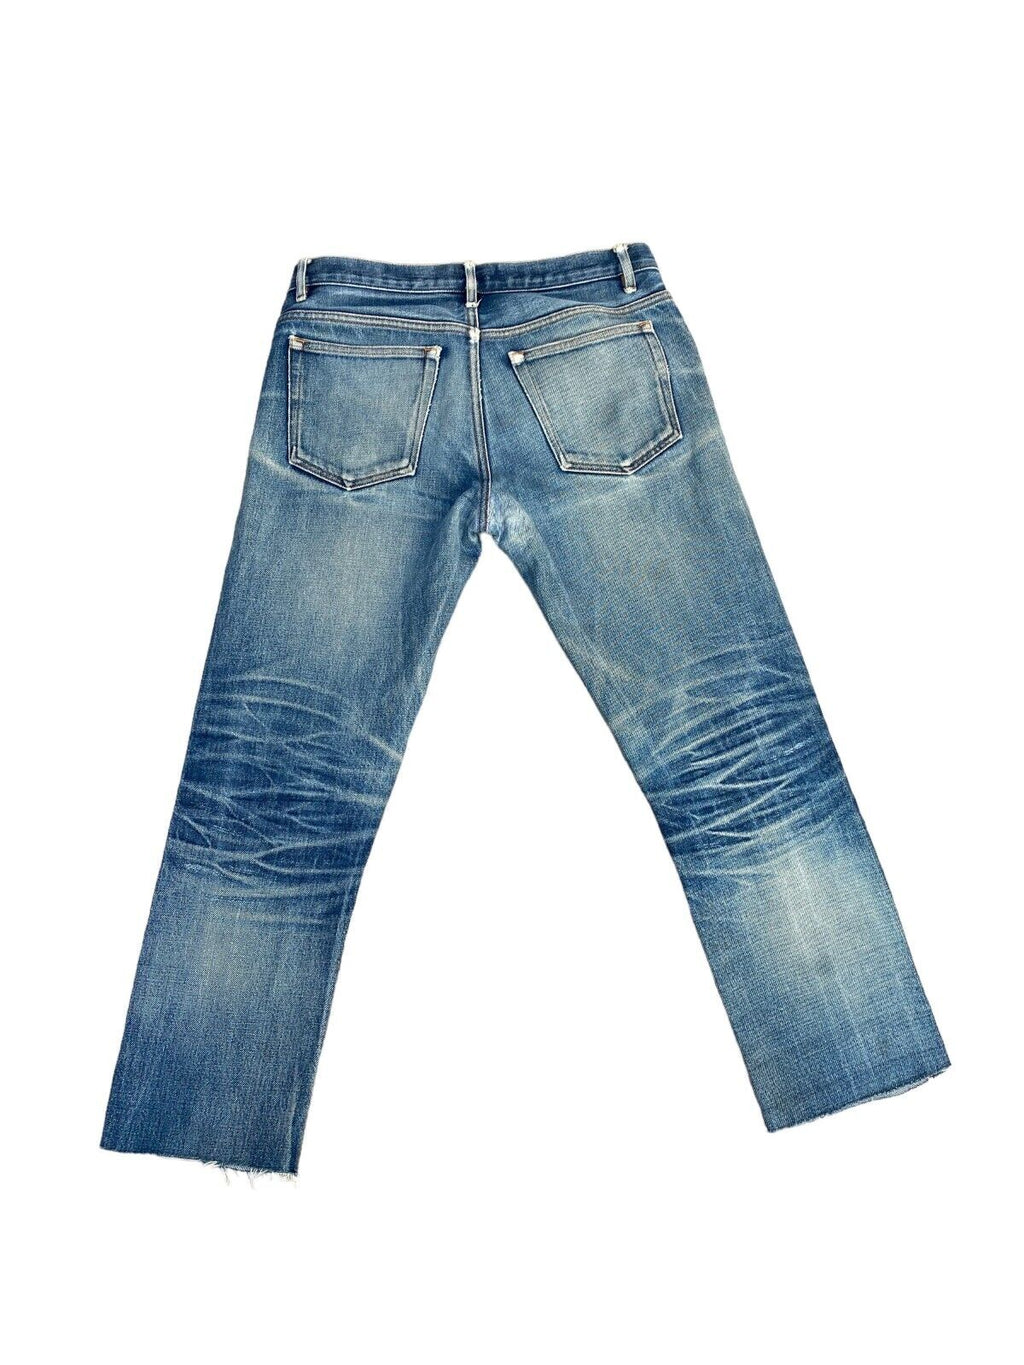 A.P.C.   Butler denim jeans Petit Standard  Size 28 Unisex   APC Butler